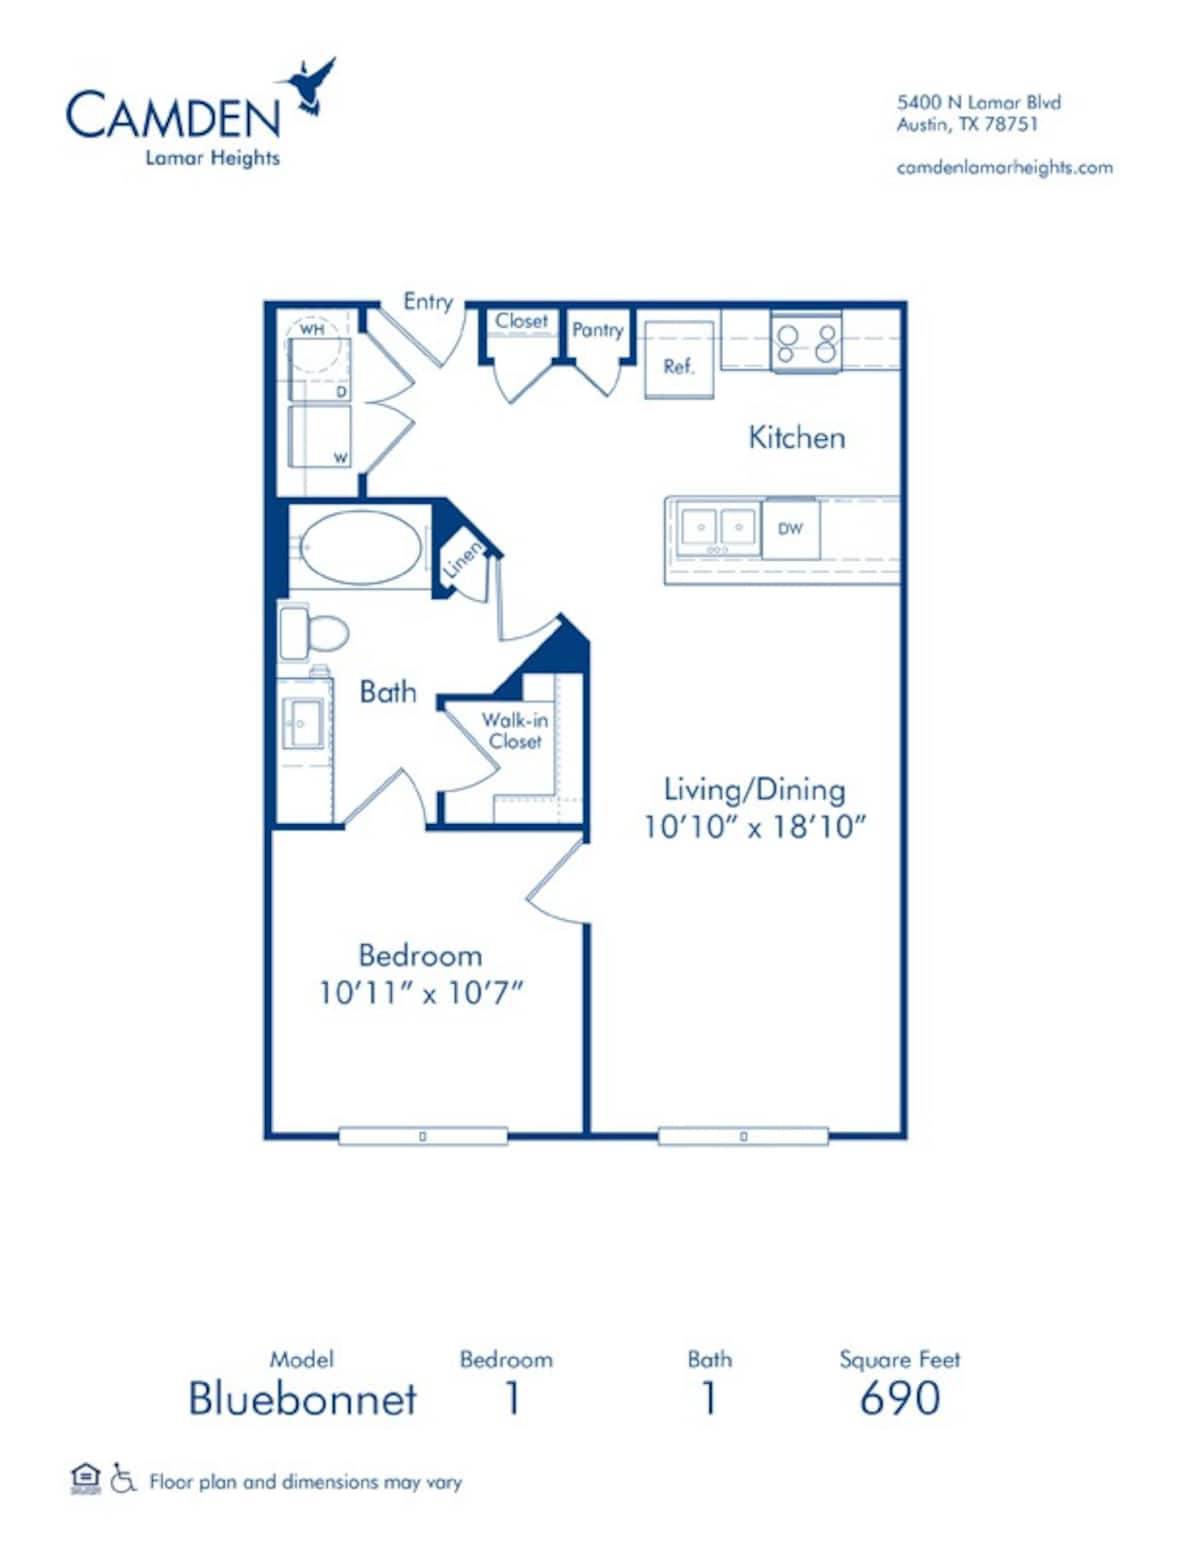 Floorplan diagram for Bluebonnet, showing 1 bedroom